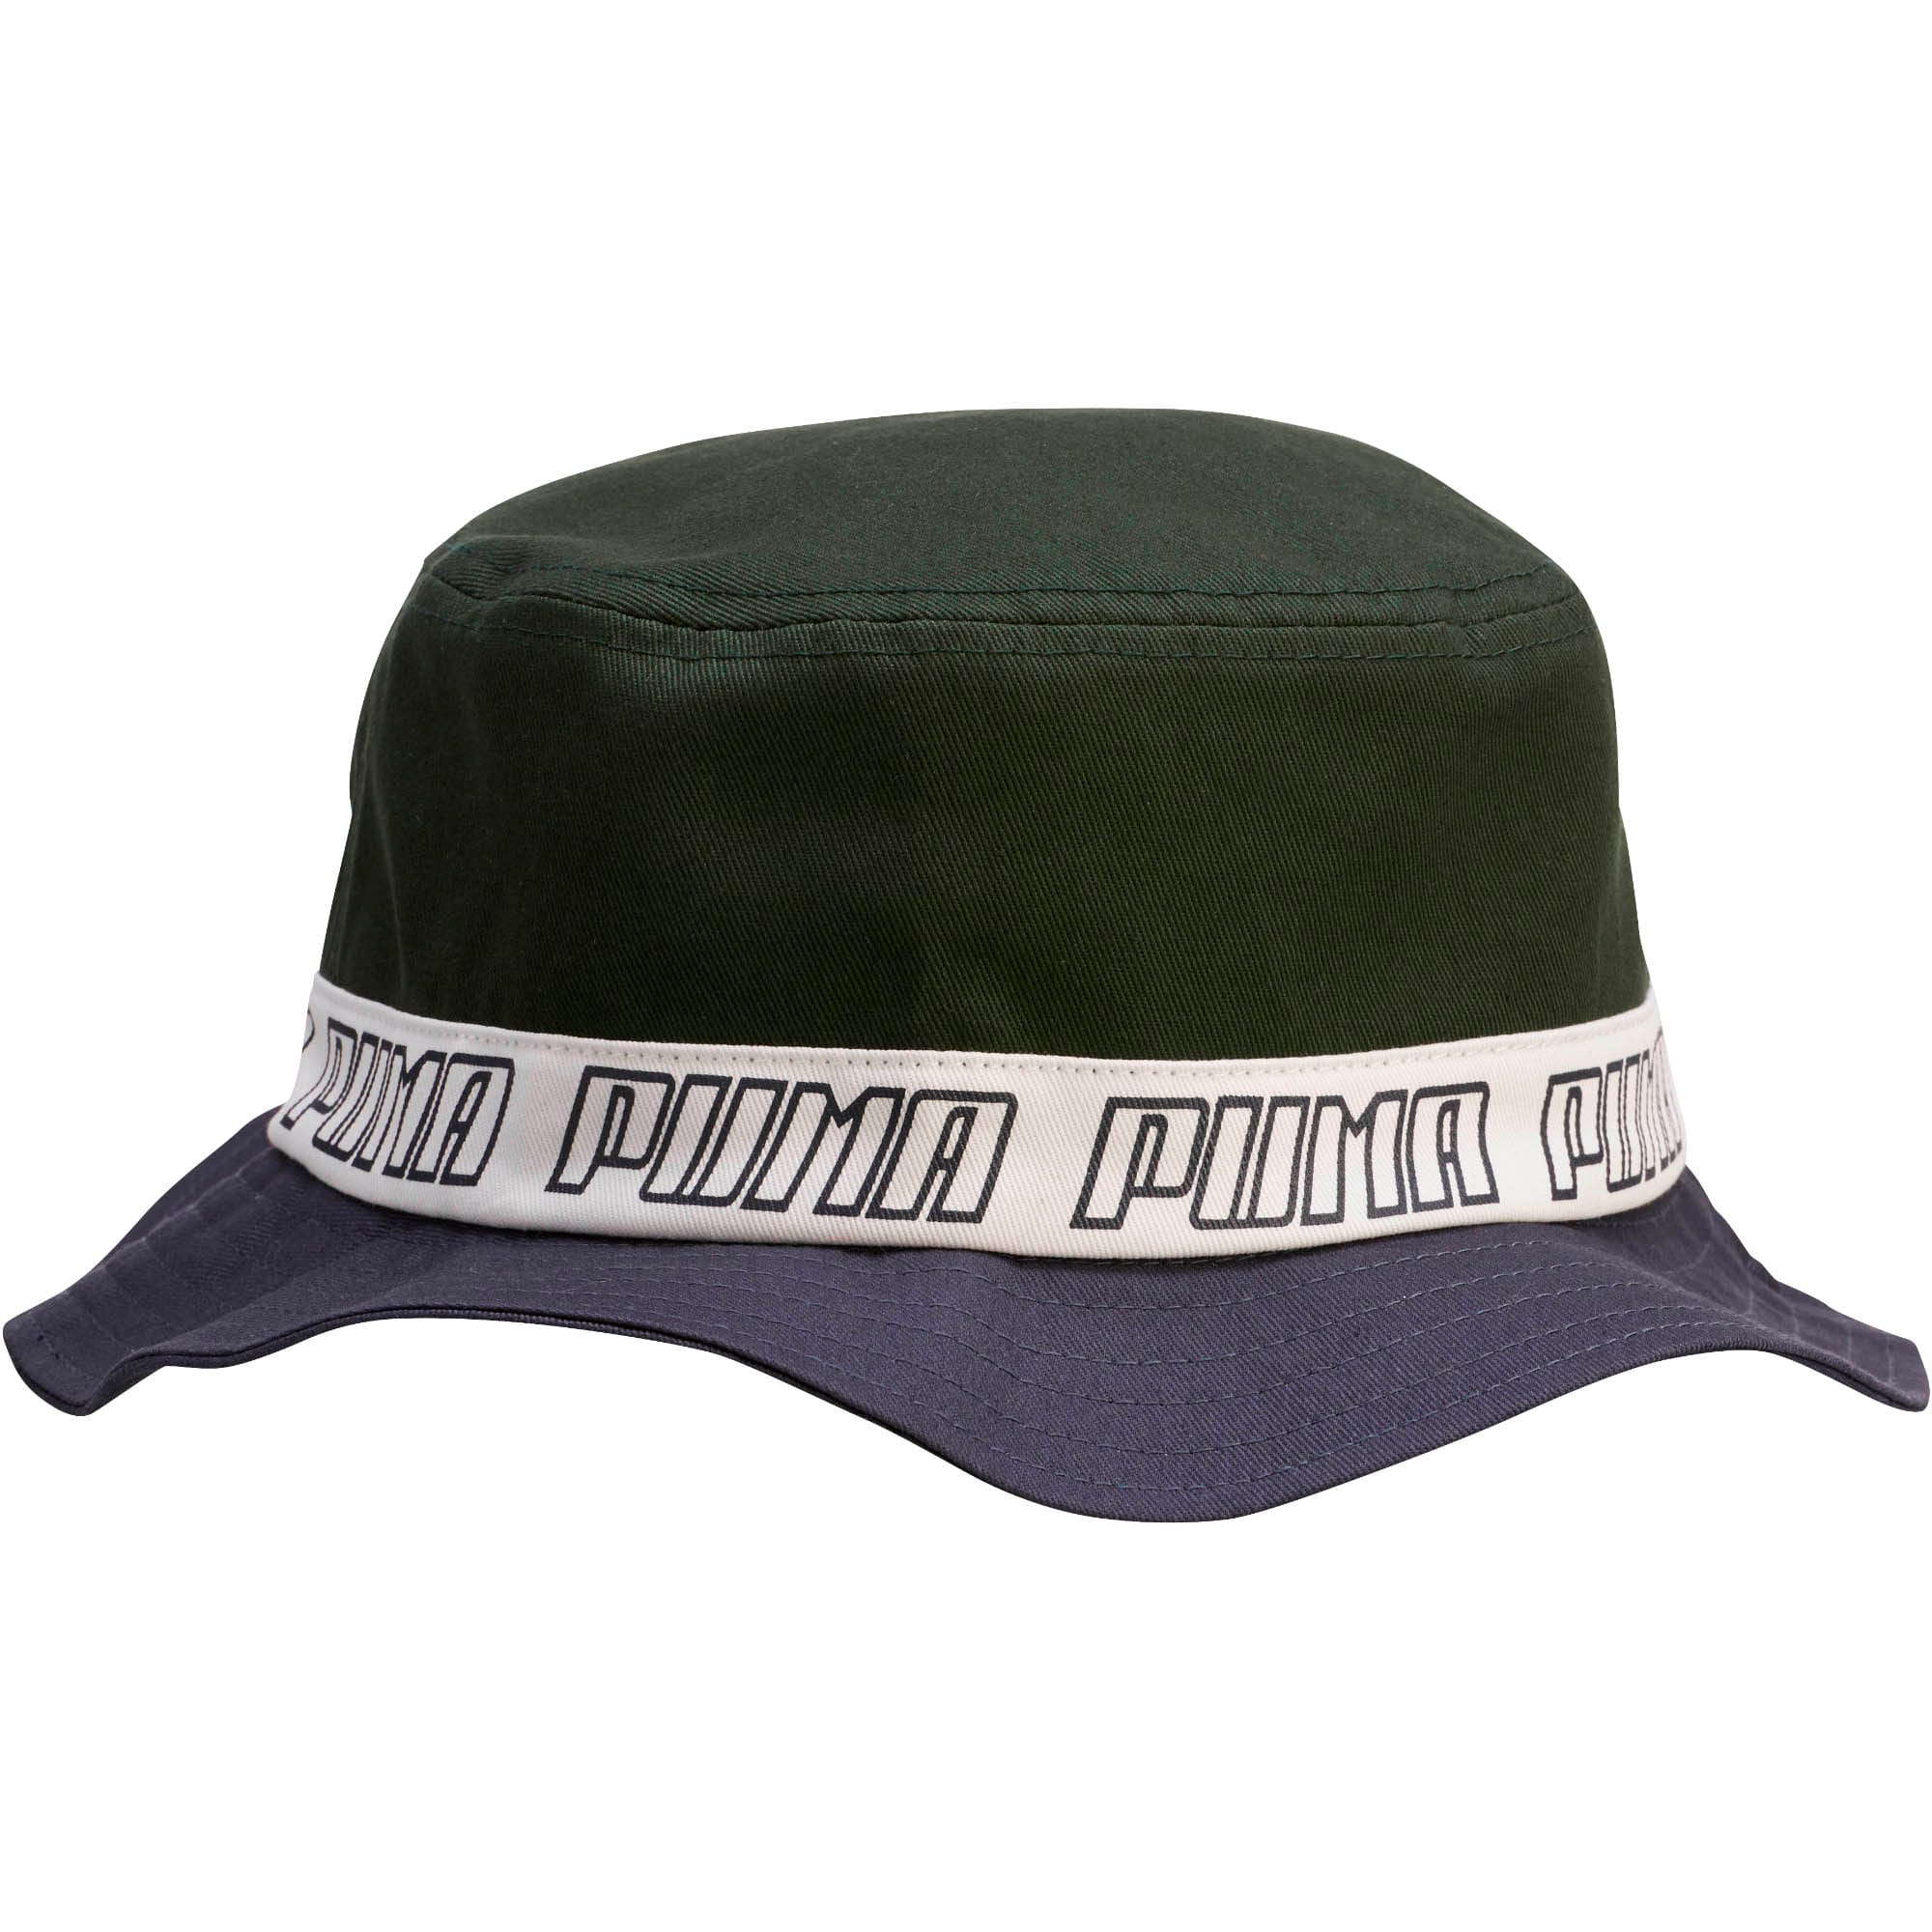 man city puma bucket hat